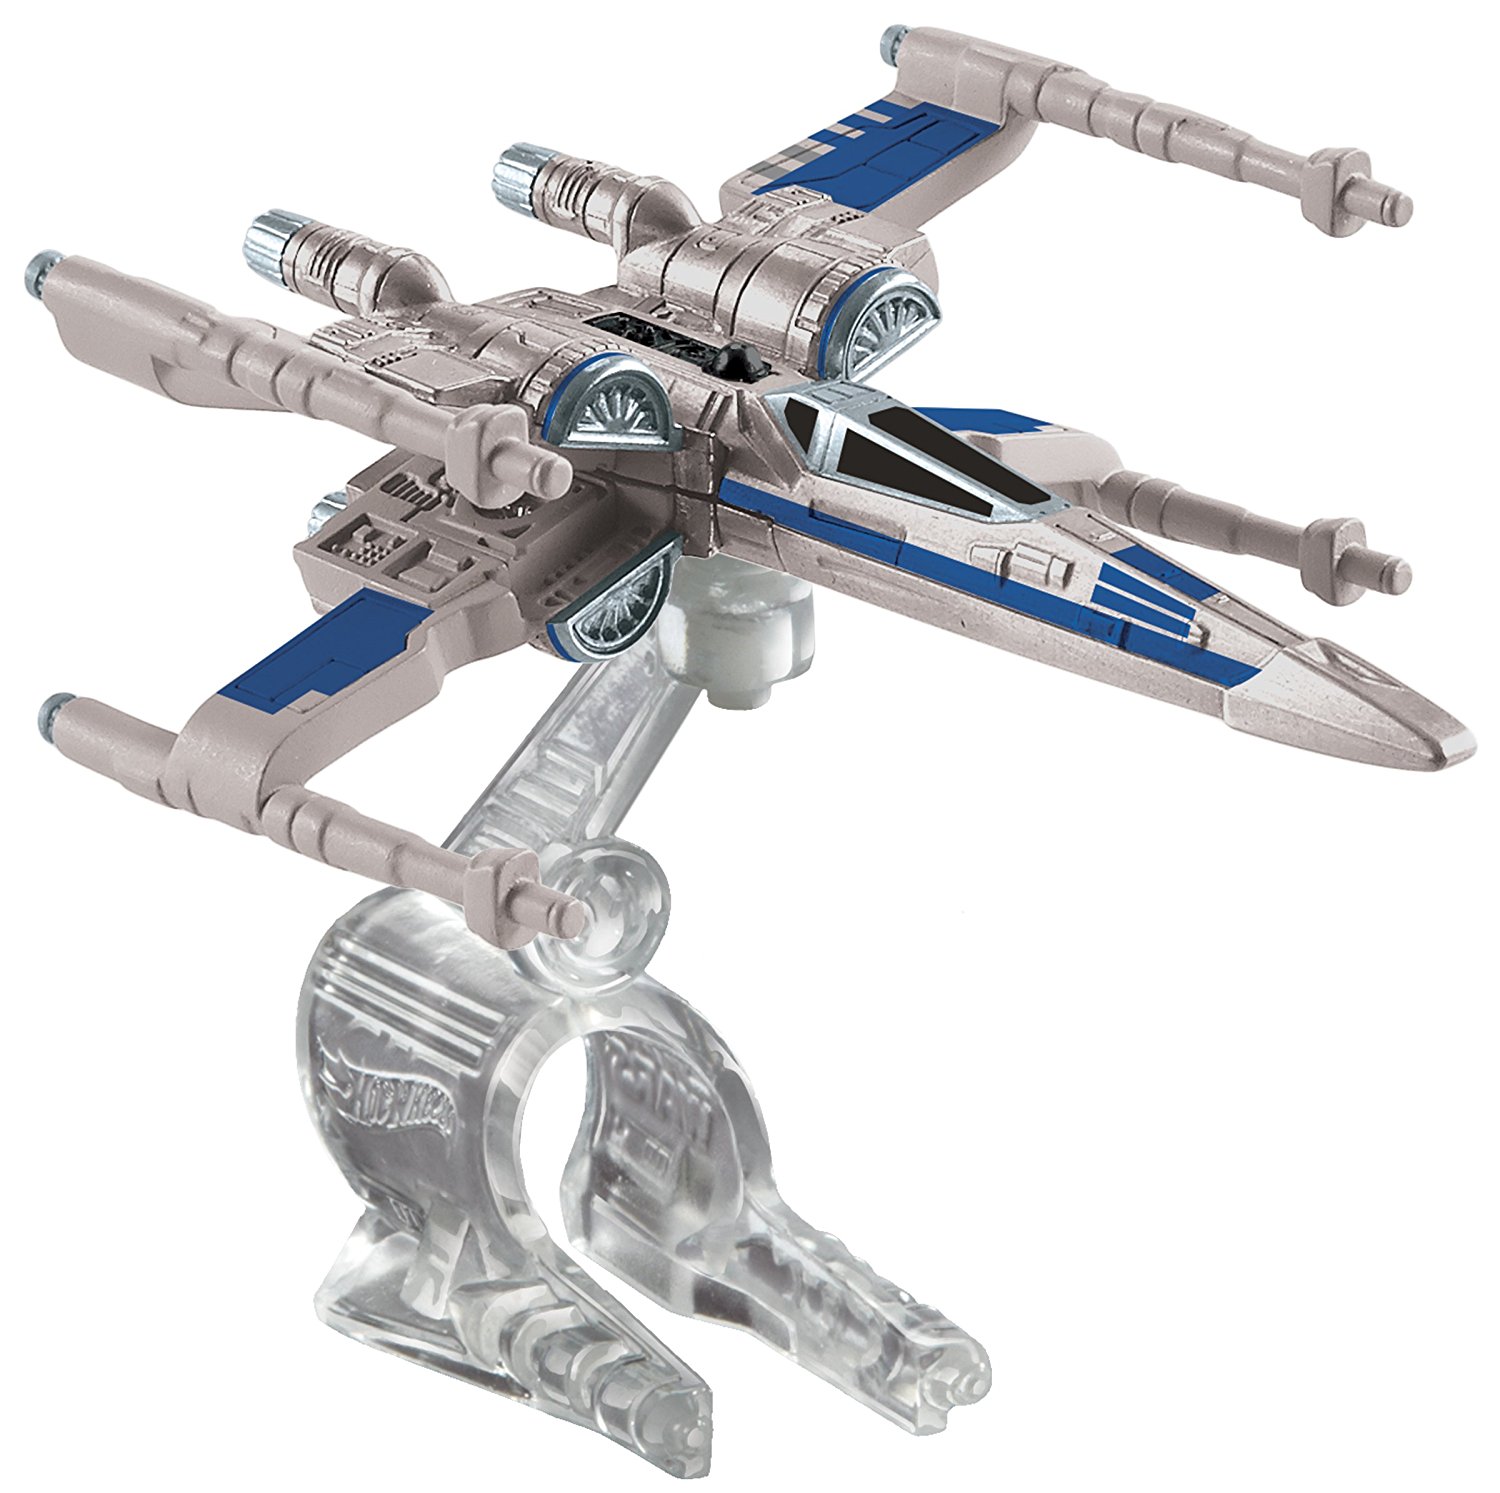 Hot Wheels 2015 Star Wars 2-pack TRANSPORTER VS X-wing Fighter CKJ81 for sale online 